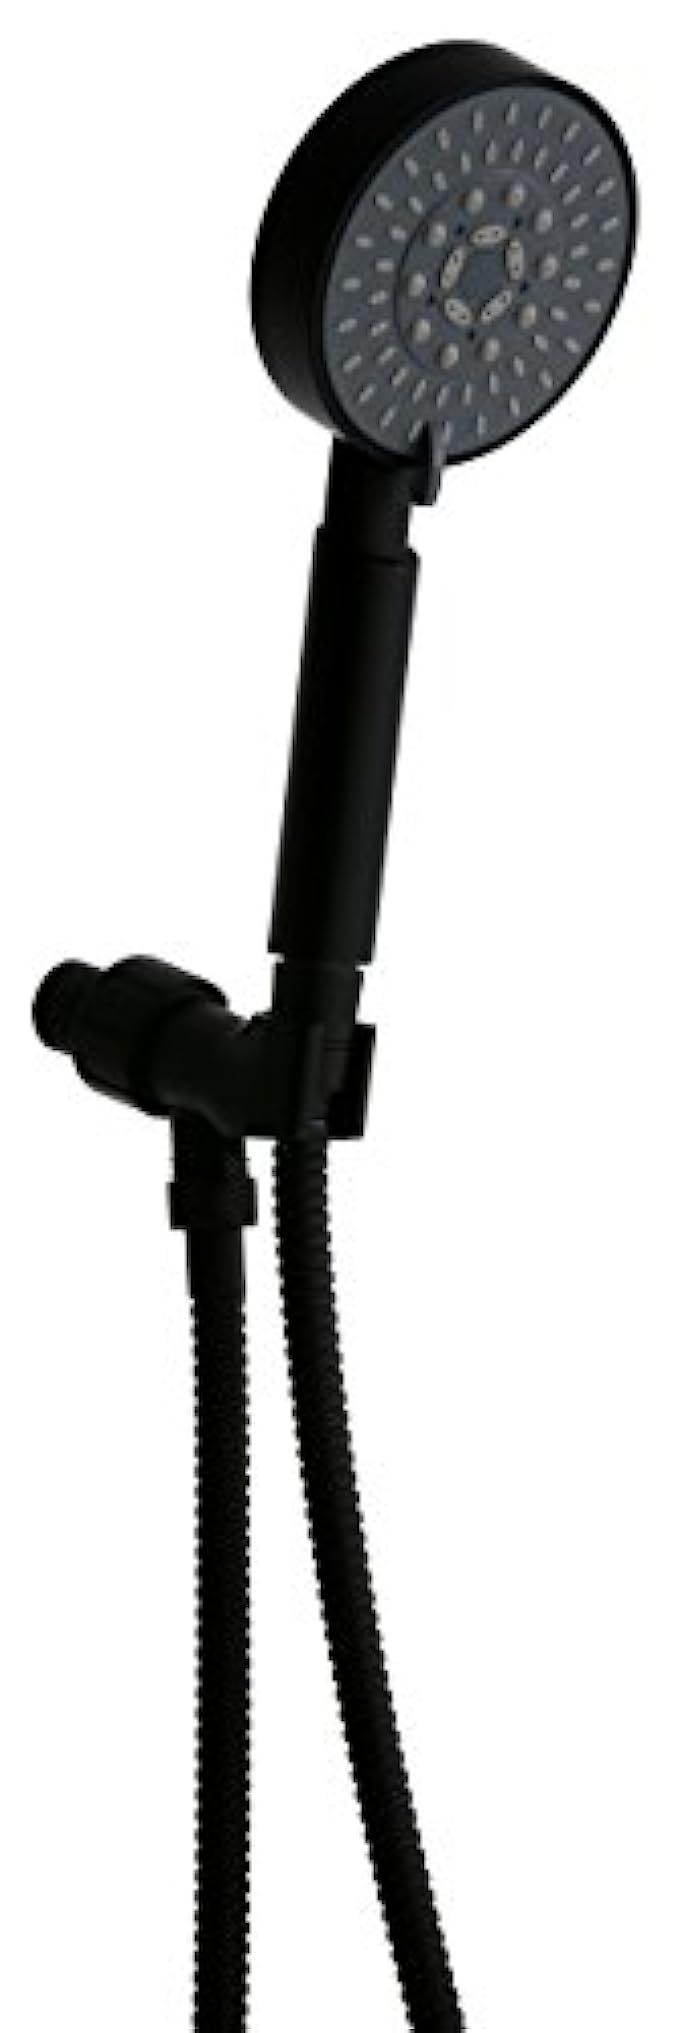 Derengge HSH-117TF-MT 5-Function Handheld Showerhead with Hose and Bracket Holder, Matte Black | Amazon (US)